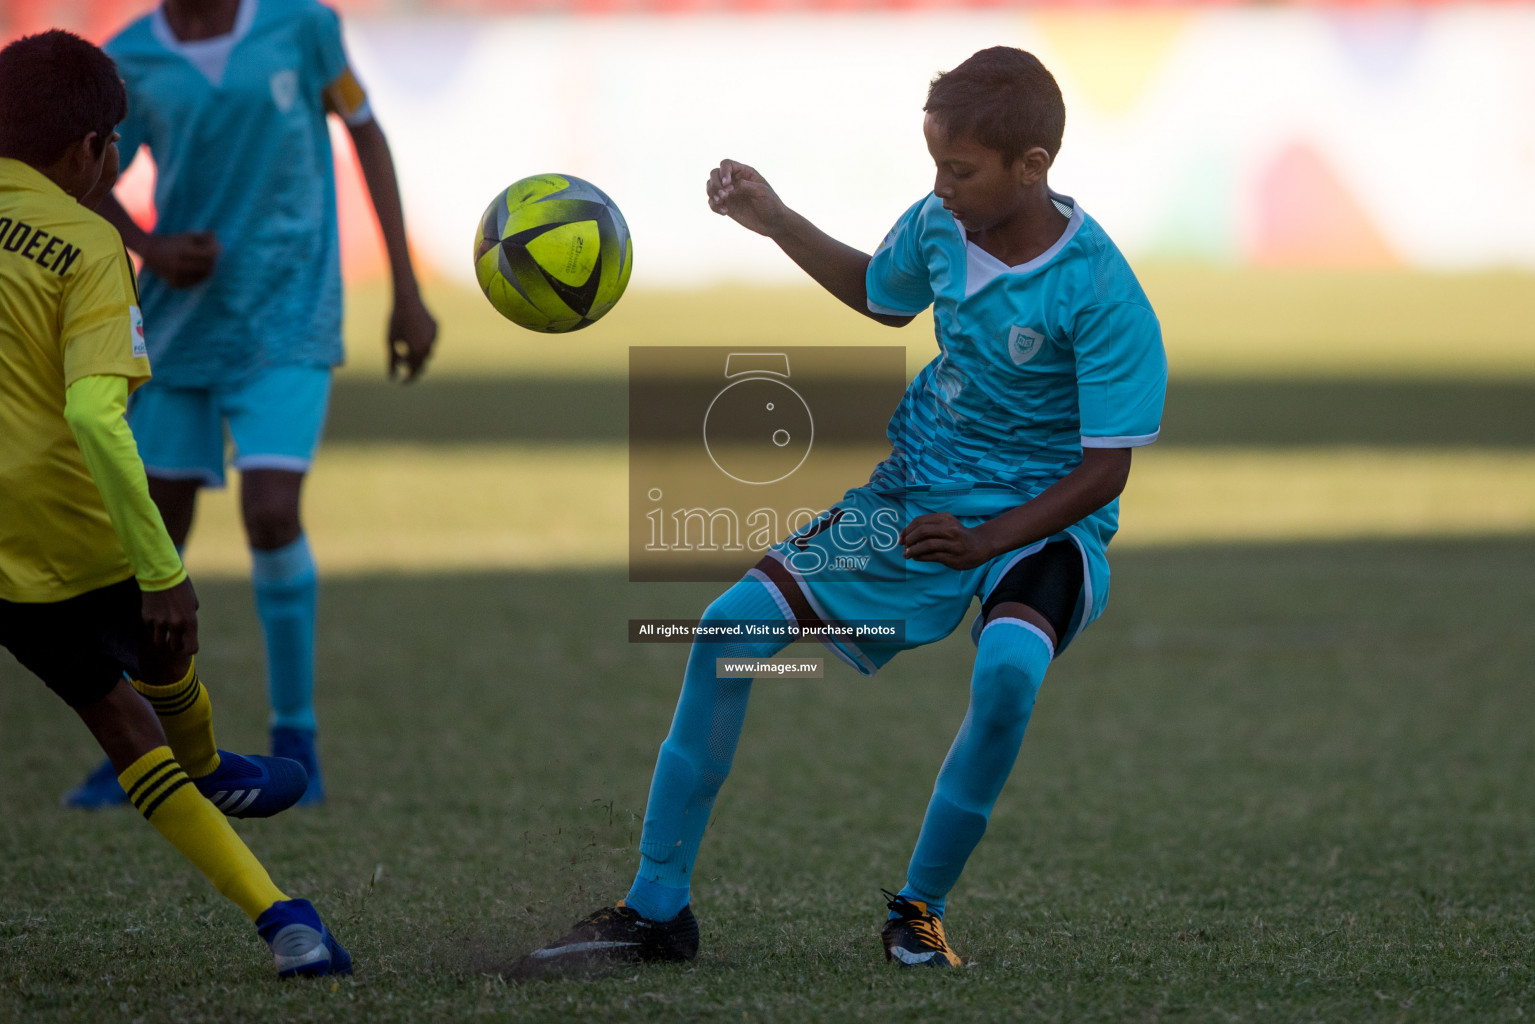 Thaajuddin School vs Rehendhi School in MAMEN Inter School Football Tournament 2019 (U13) in Male, Maldives on 27th March 2019, Photos: Suadh Abdul Sattar / images.mv